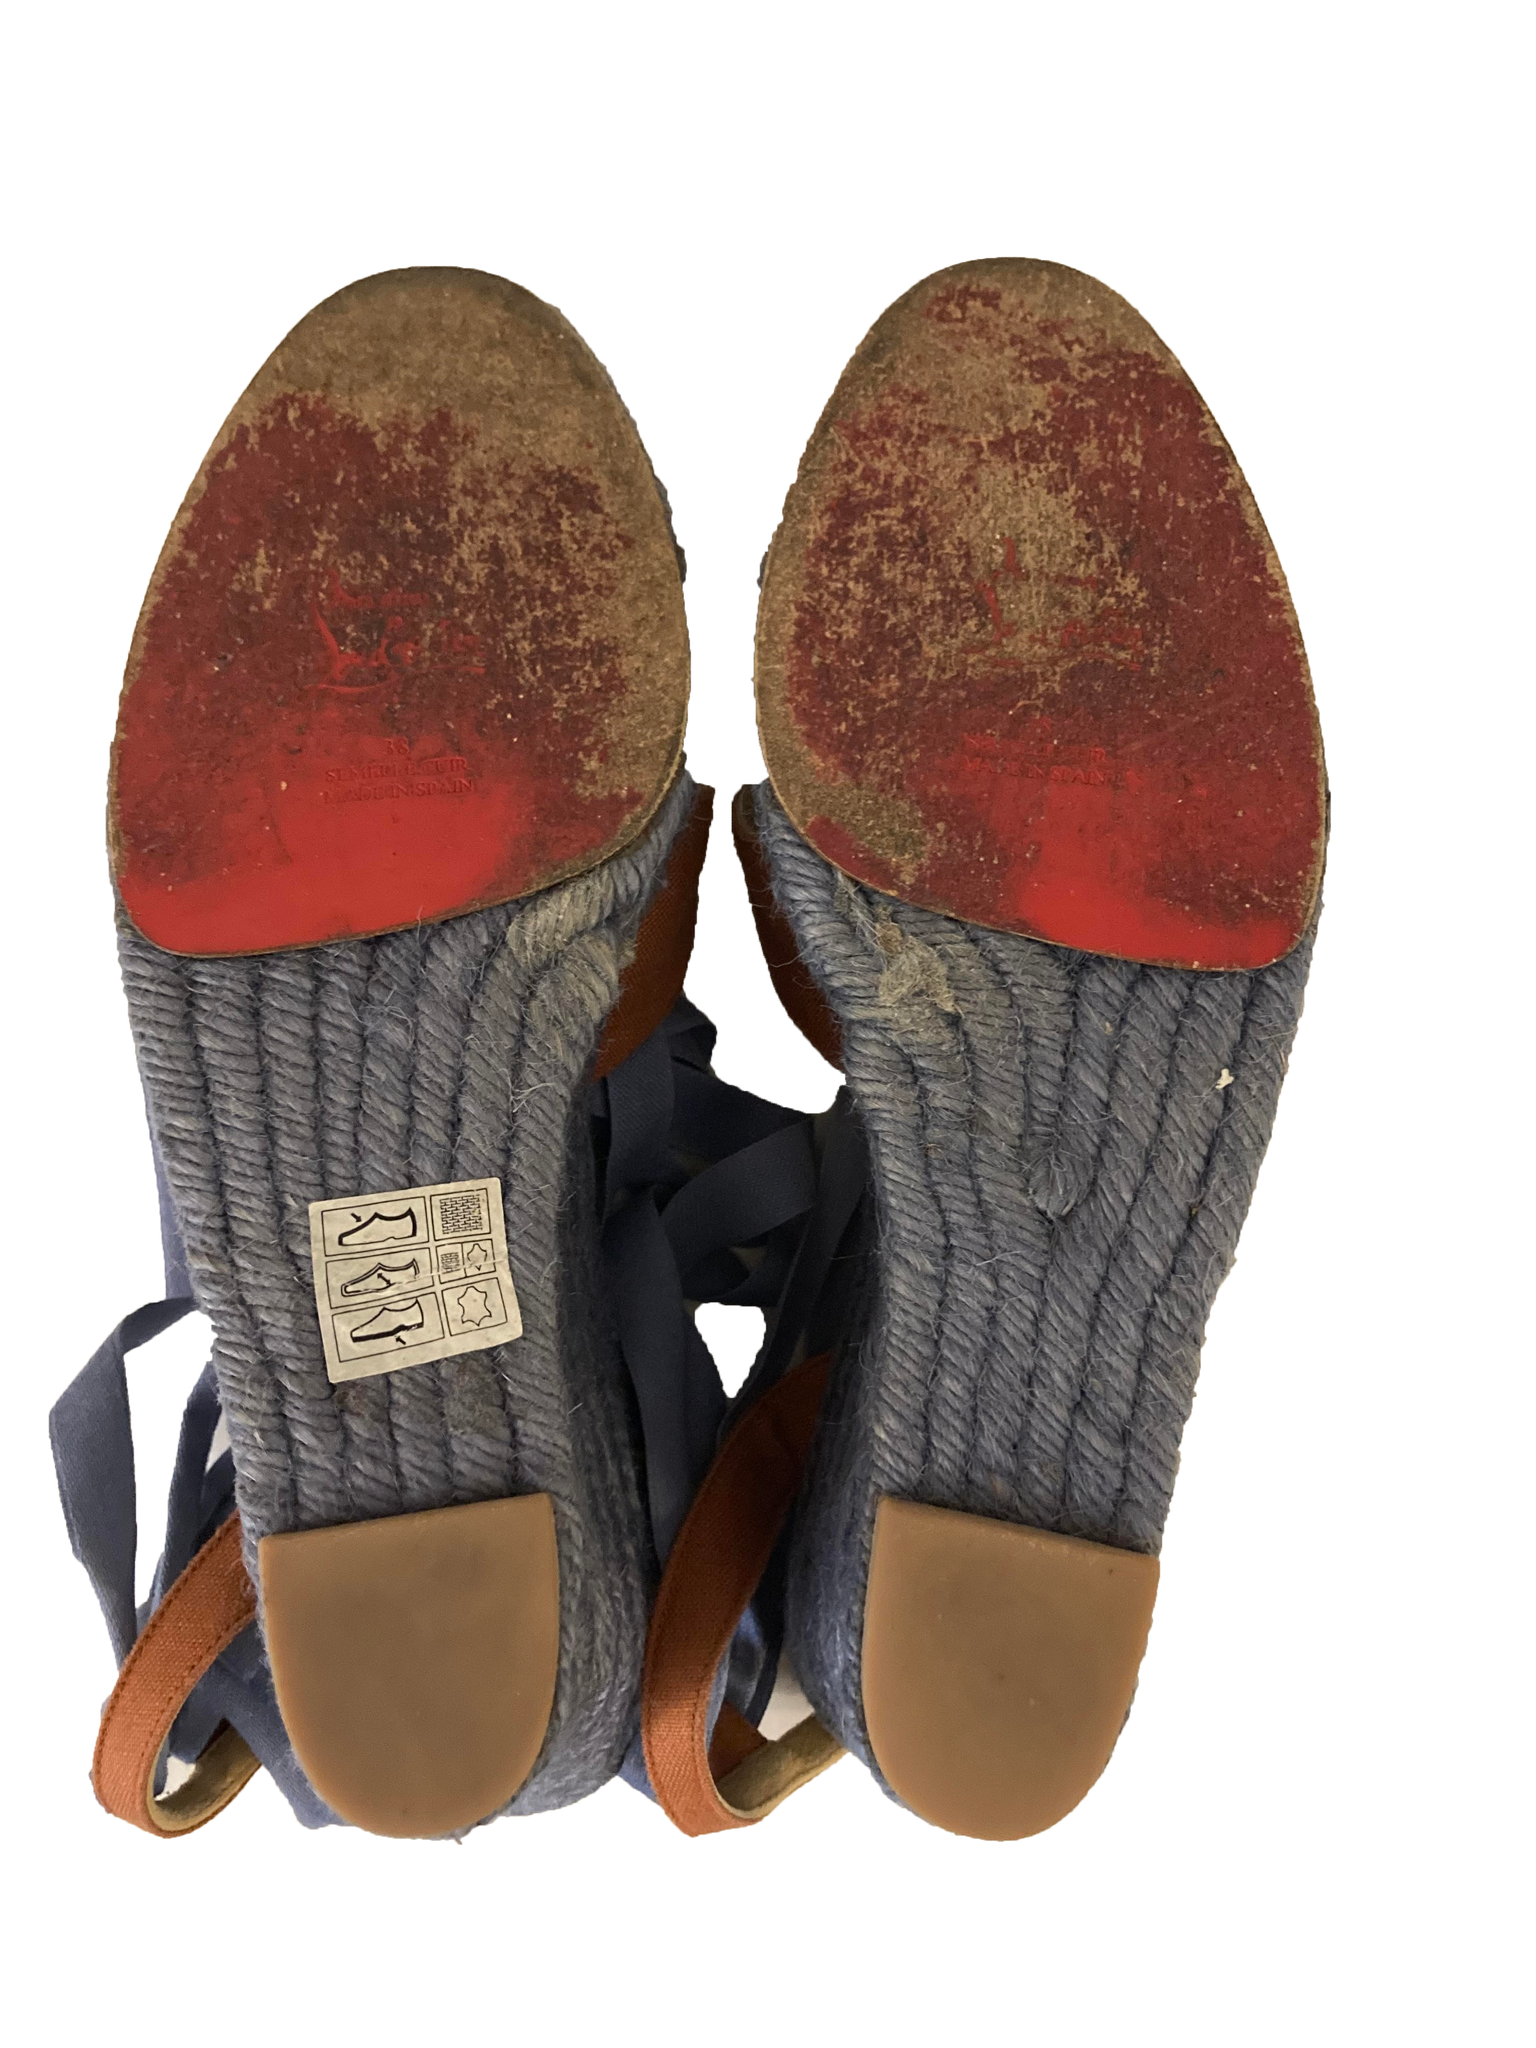 Espadrilles Wedge Sandals